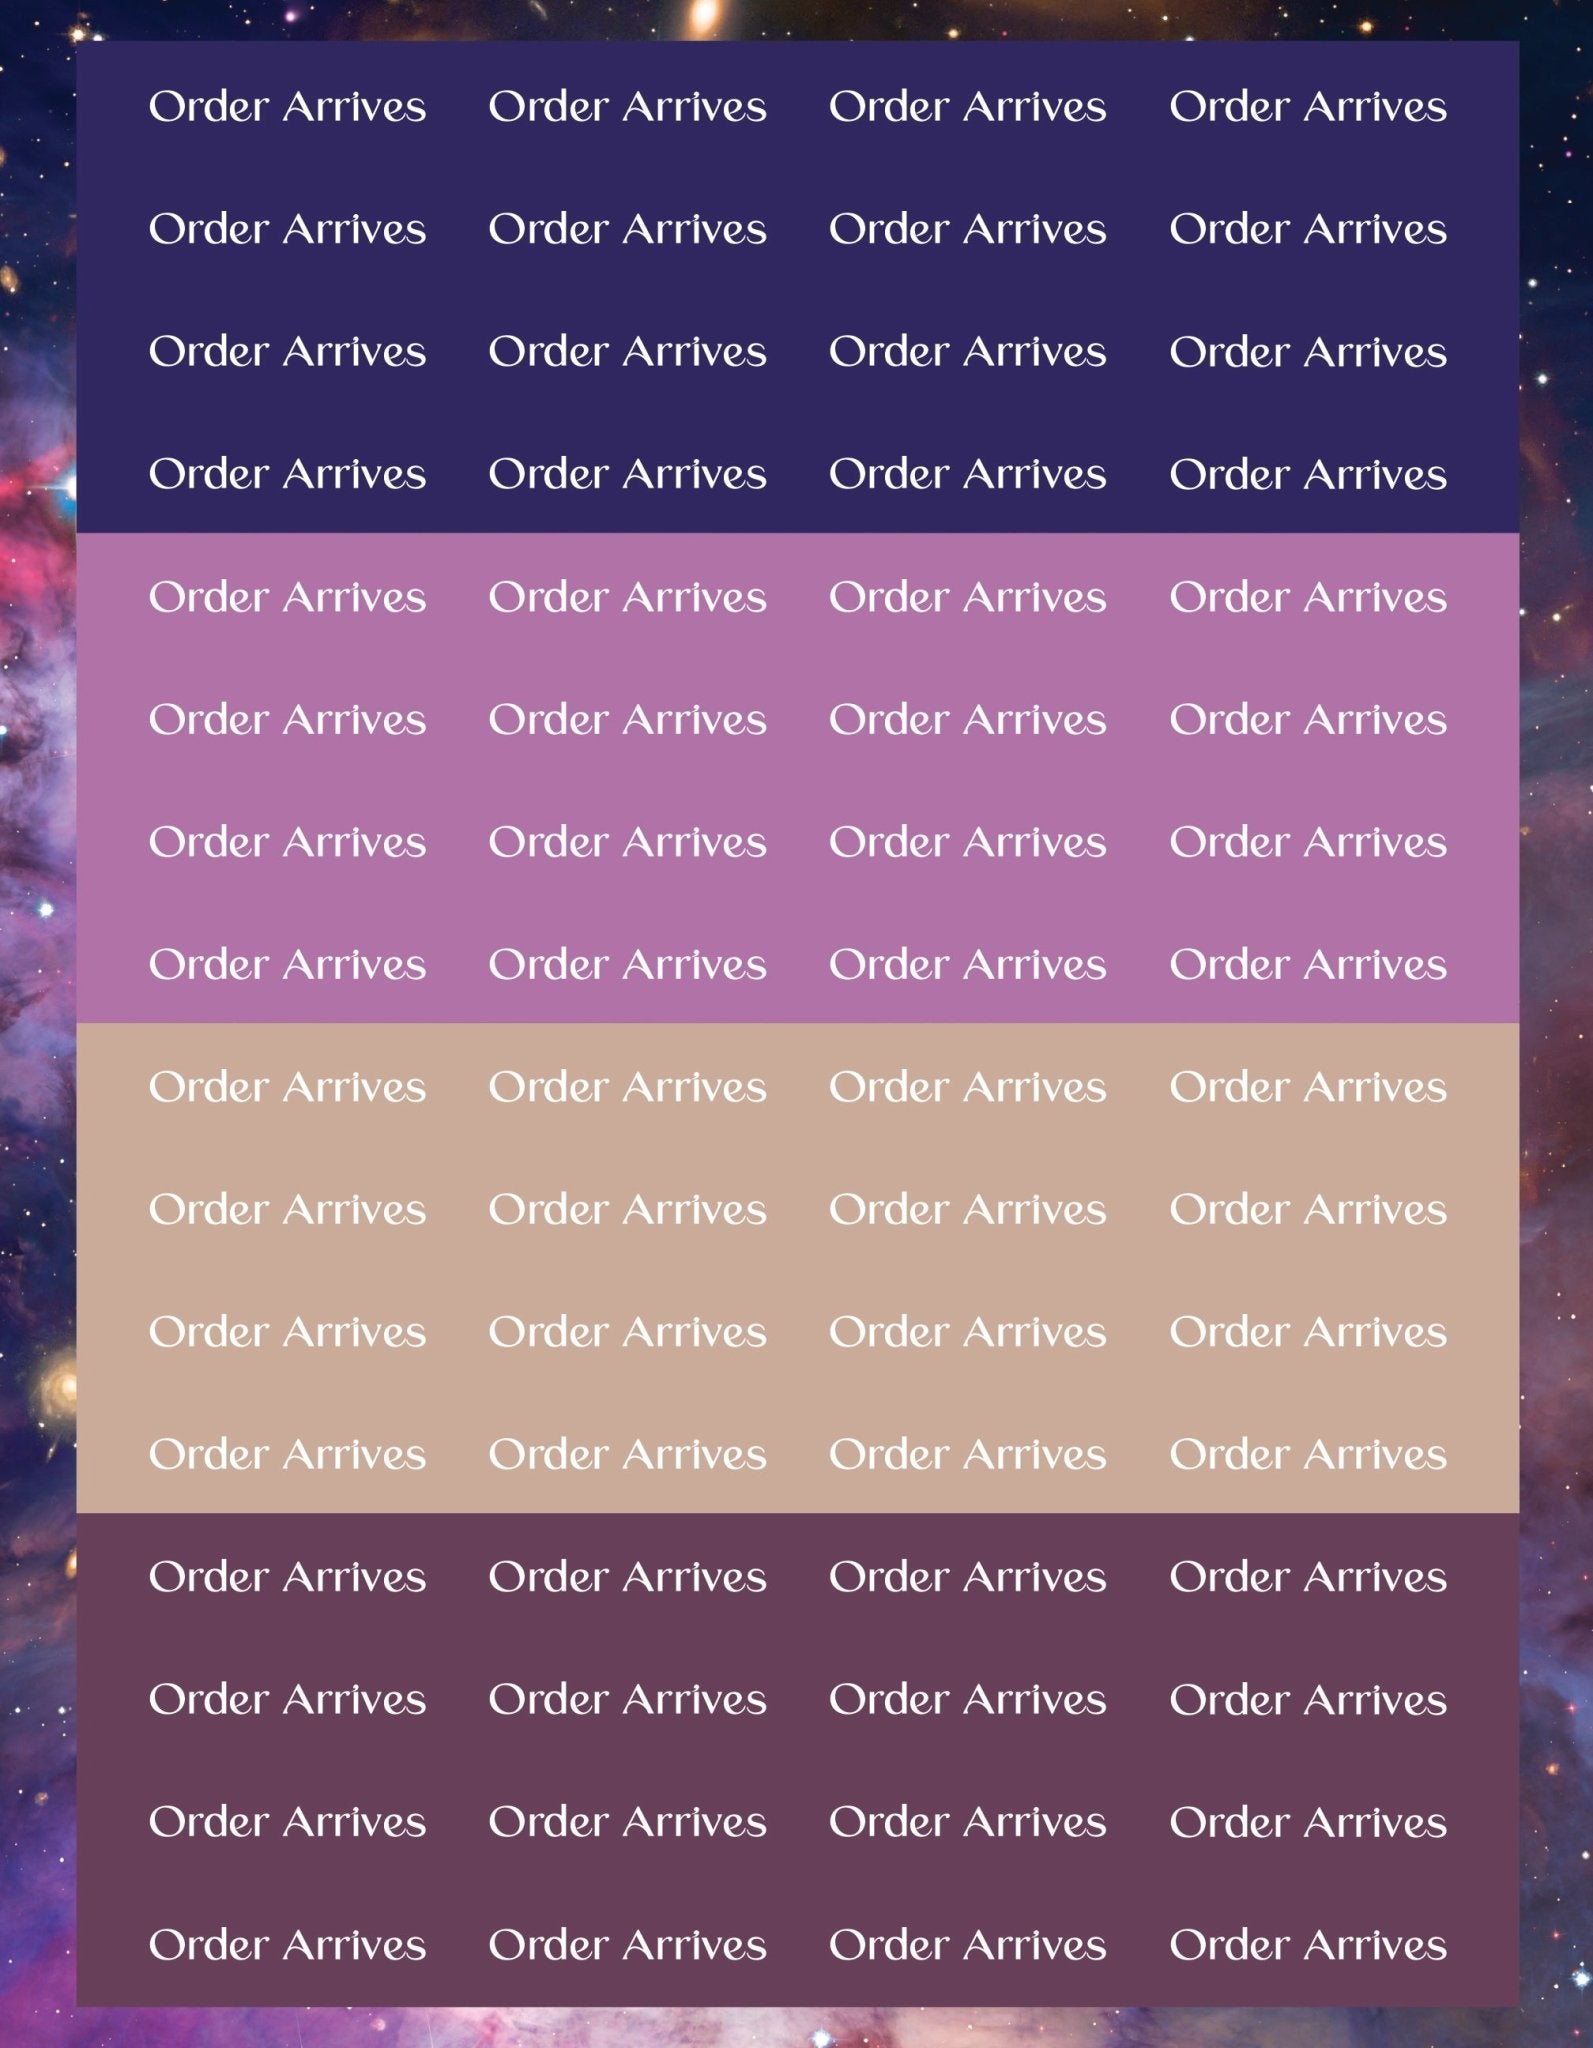 Order Arrives Sticker Sheets - 9 Designs/Colors - Colibri Paper Co